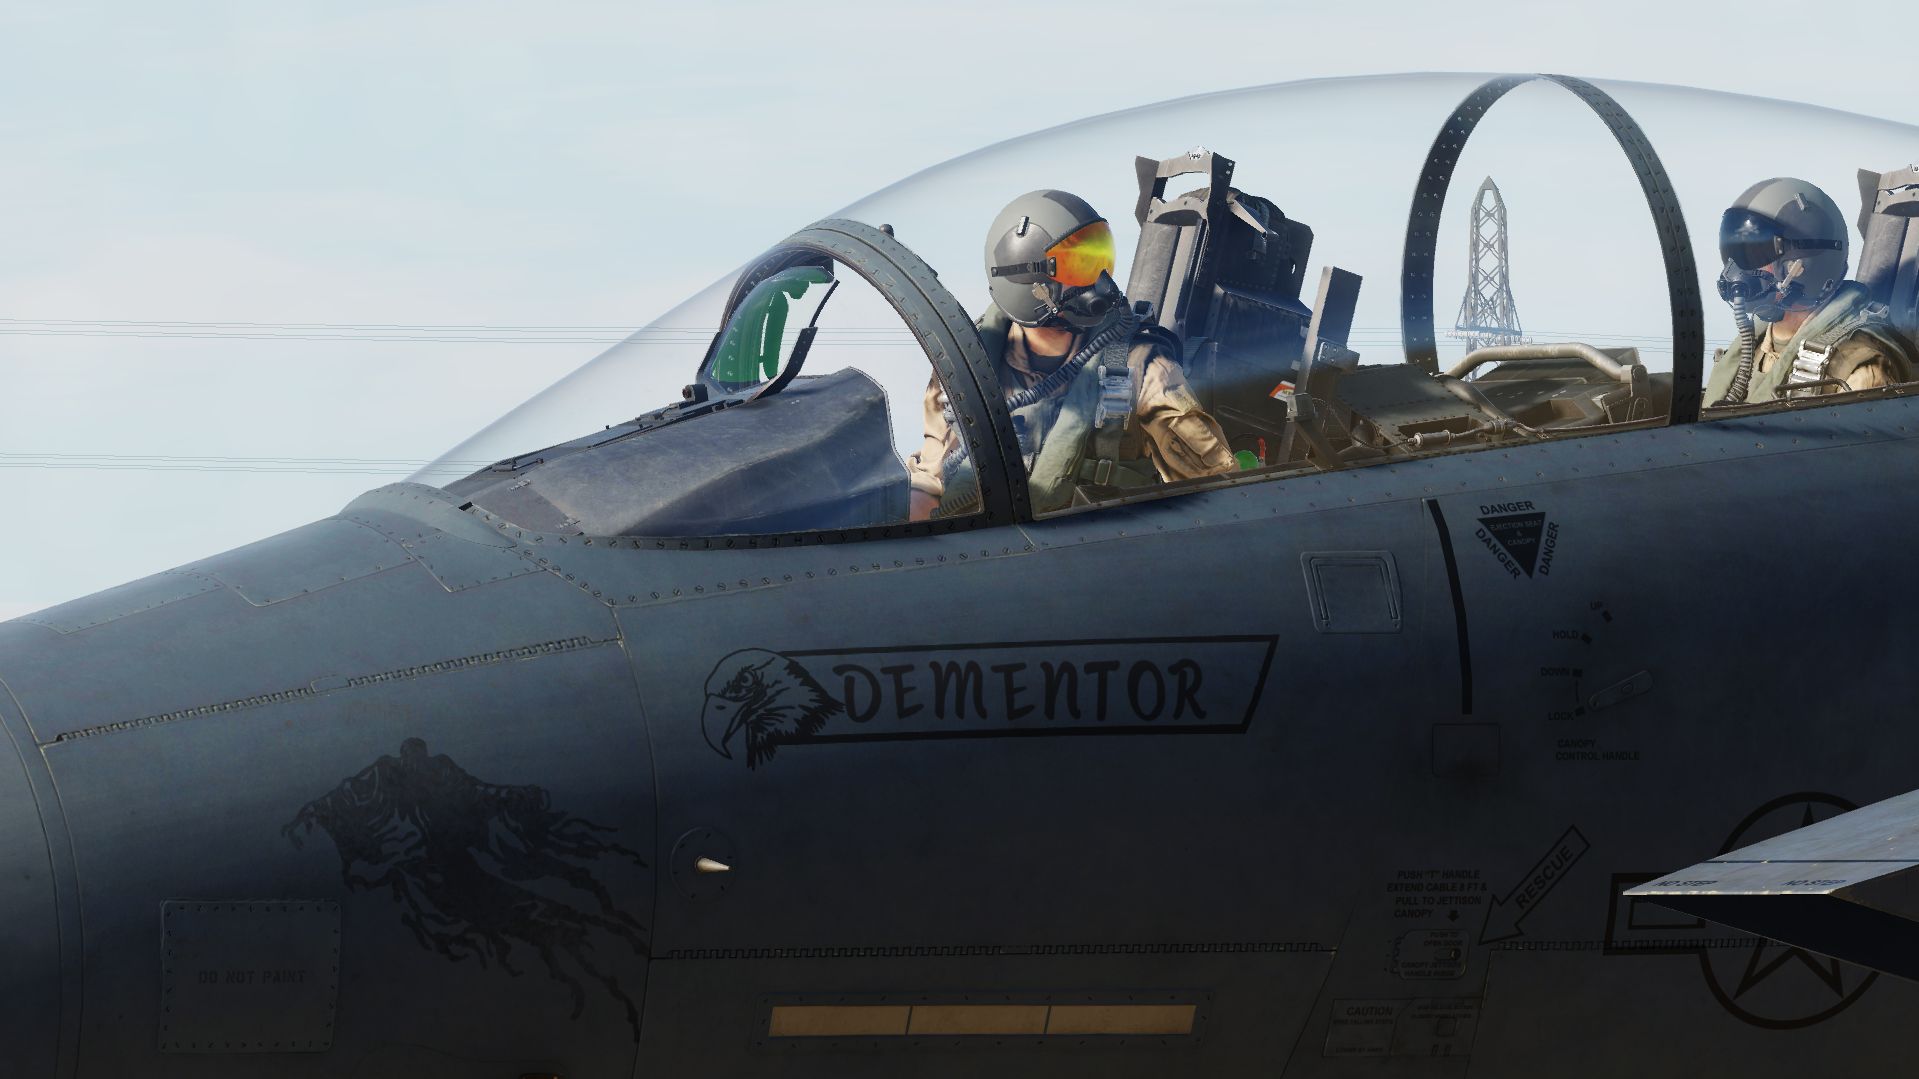 F-15E Strike eagle MO 91-600 "Dementor"